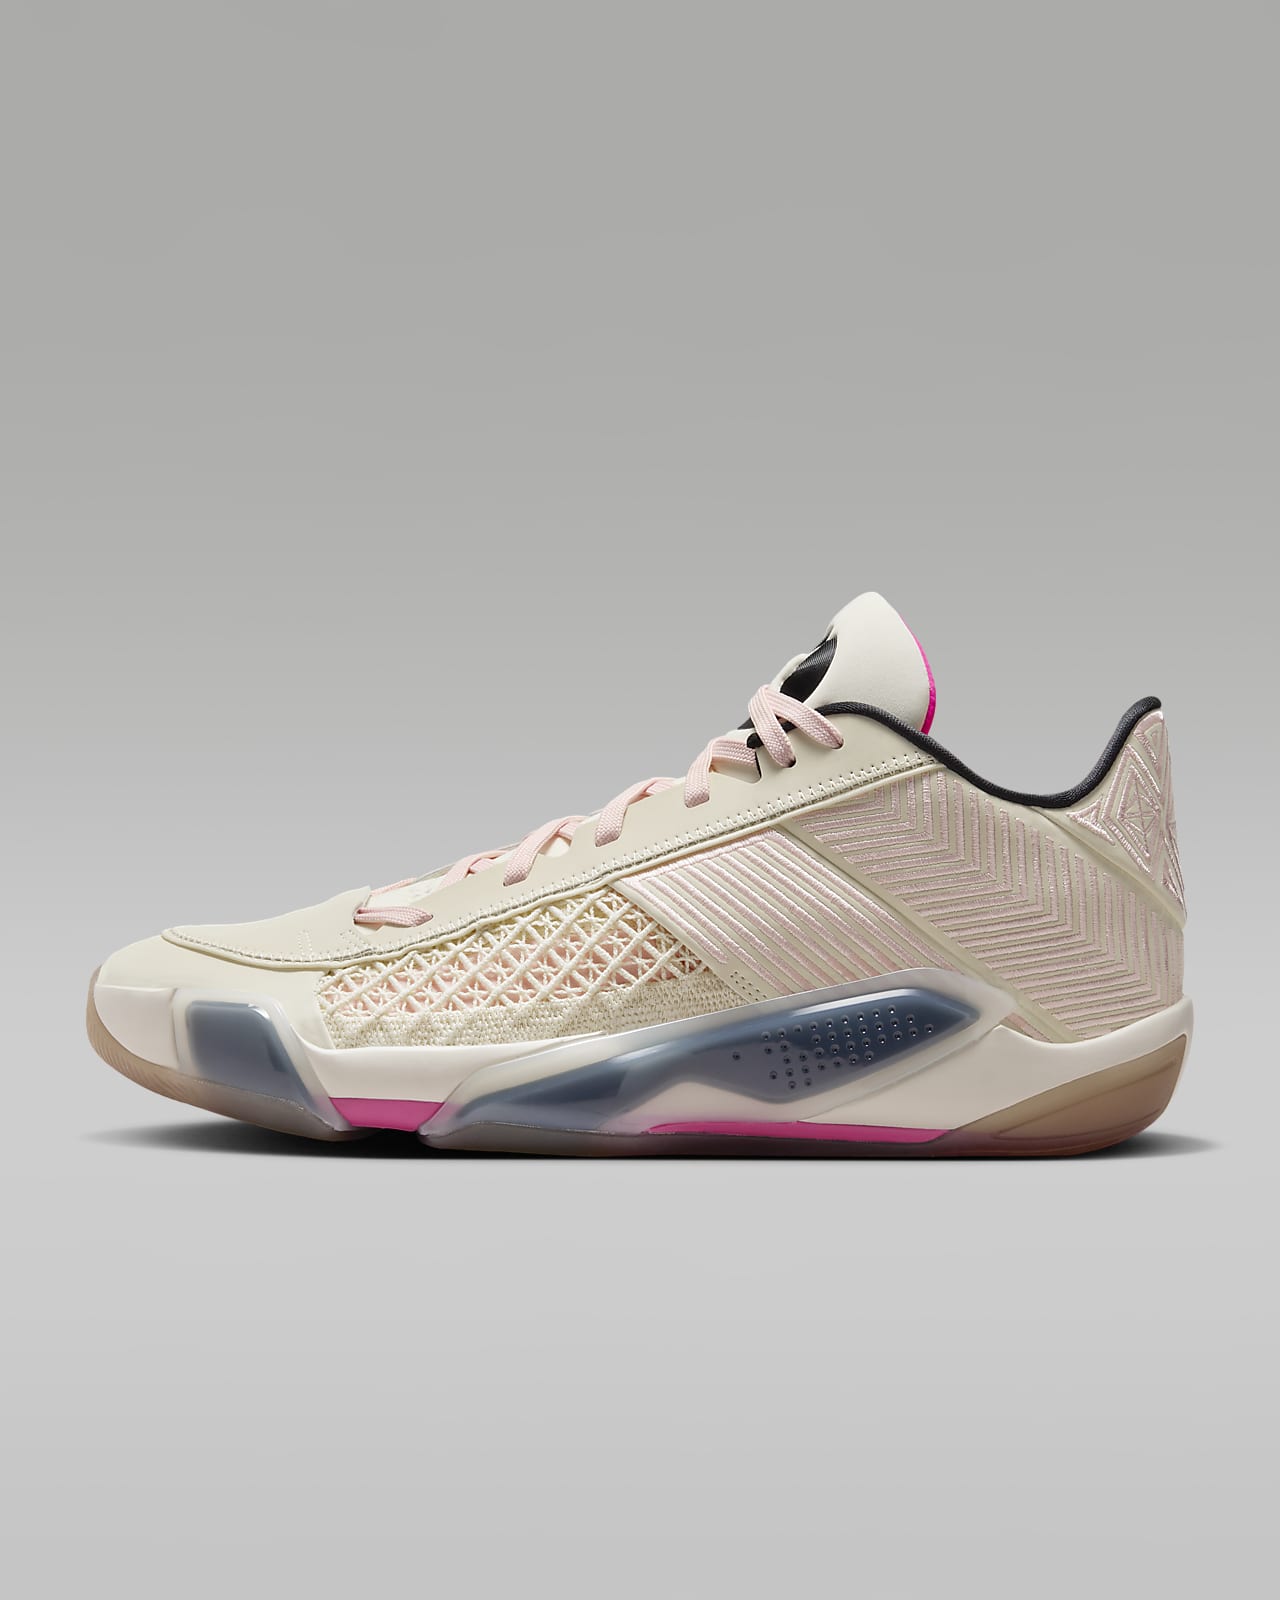 Air Jordan XXXVIII Low "Fresh Start" Basketball Shoes